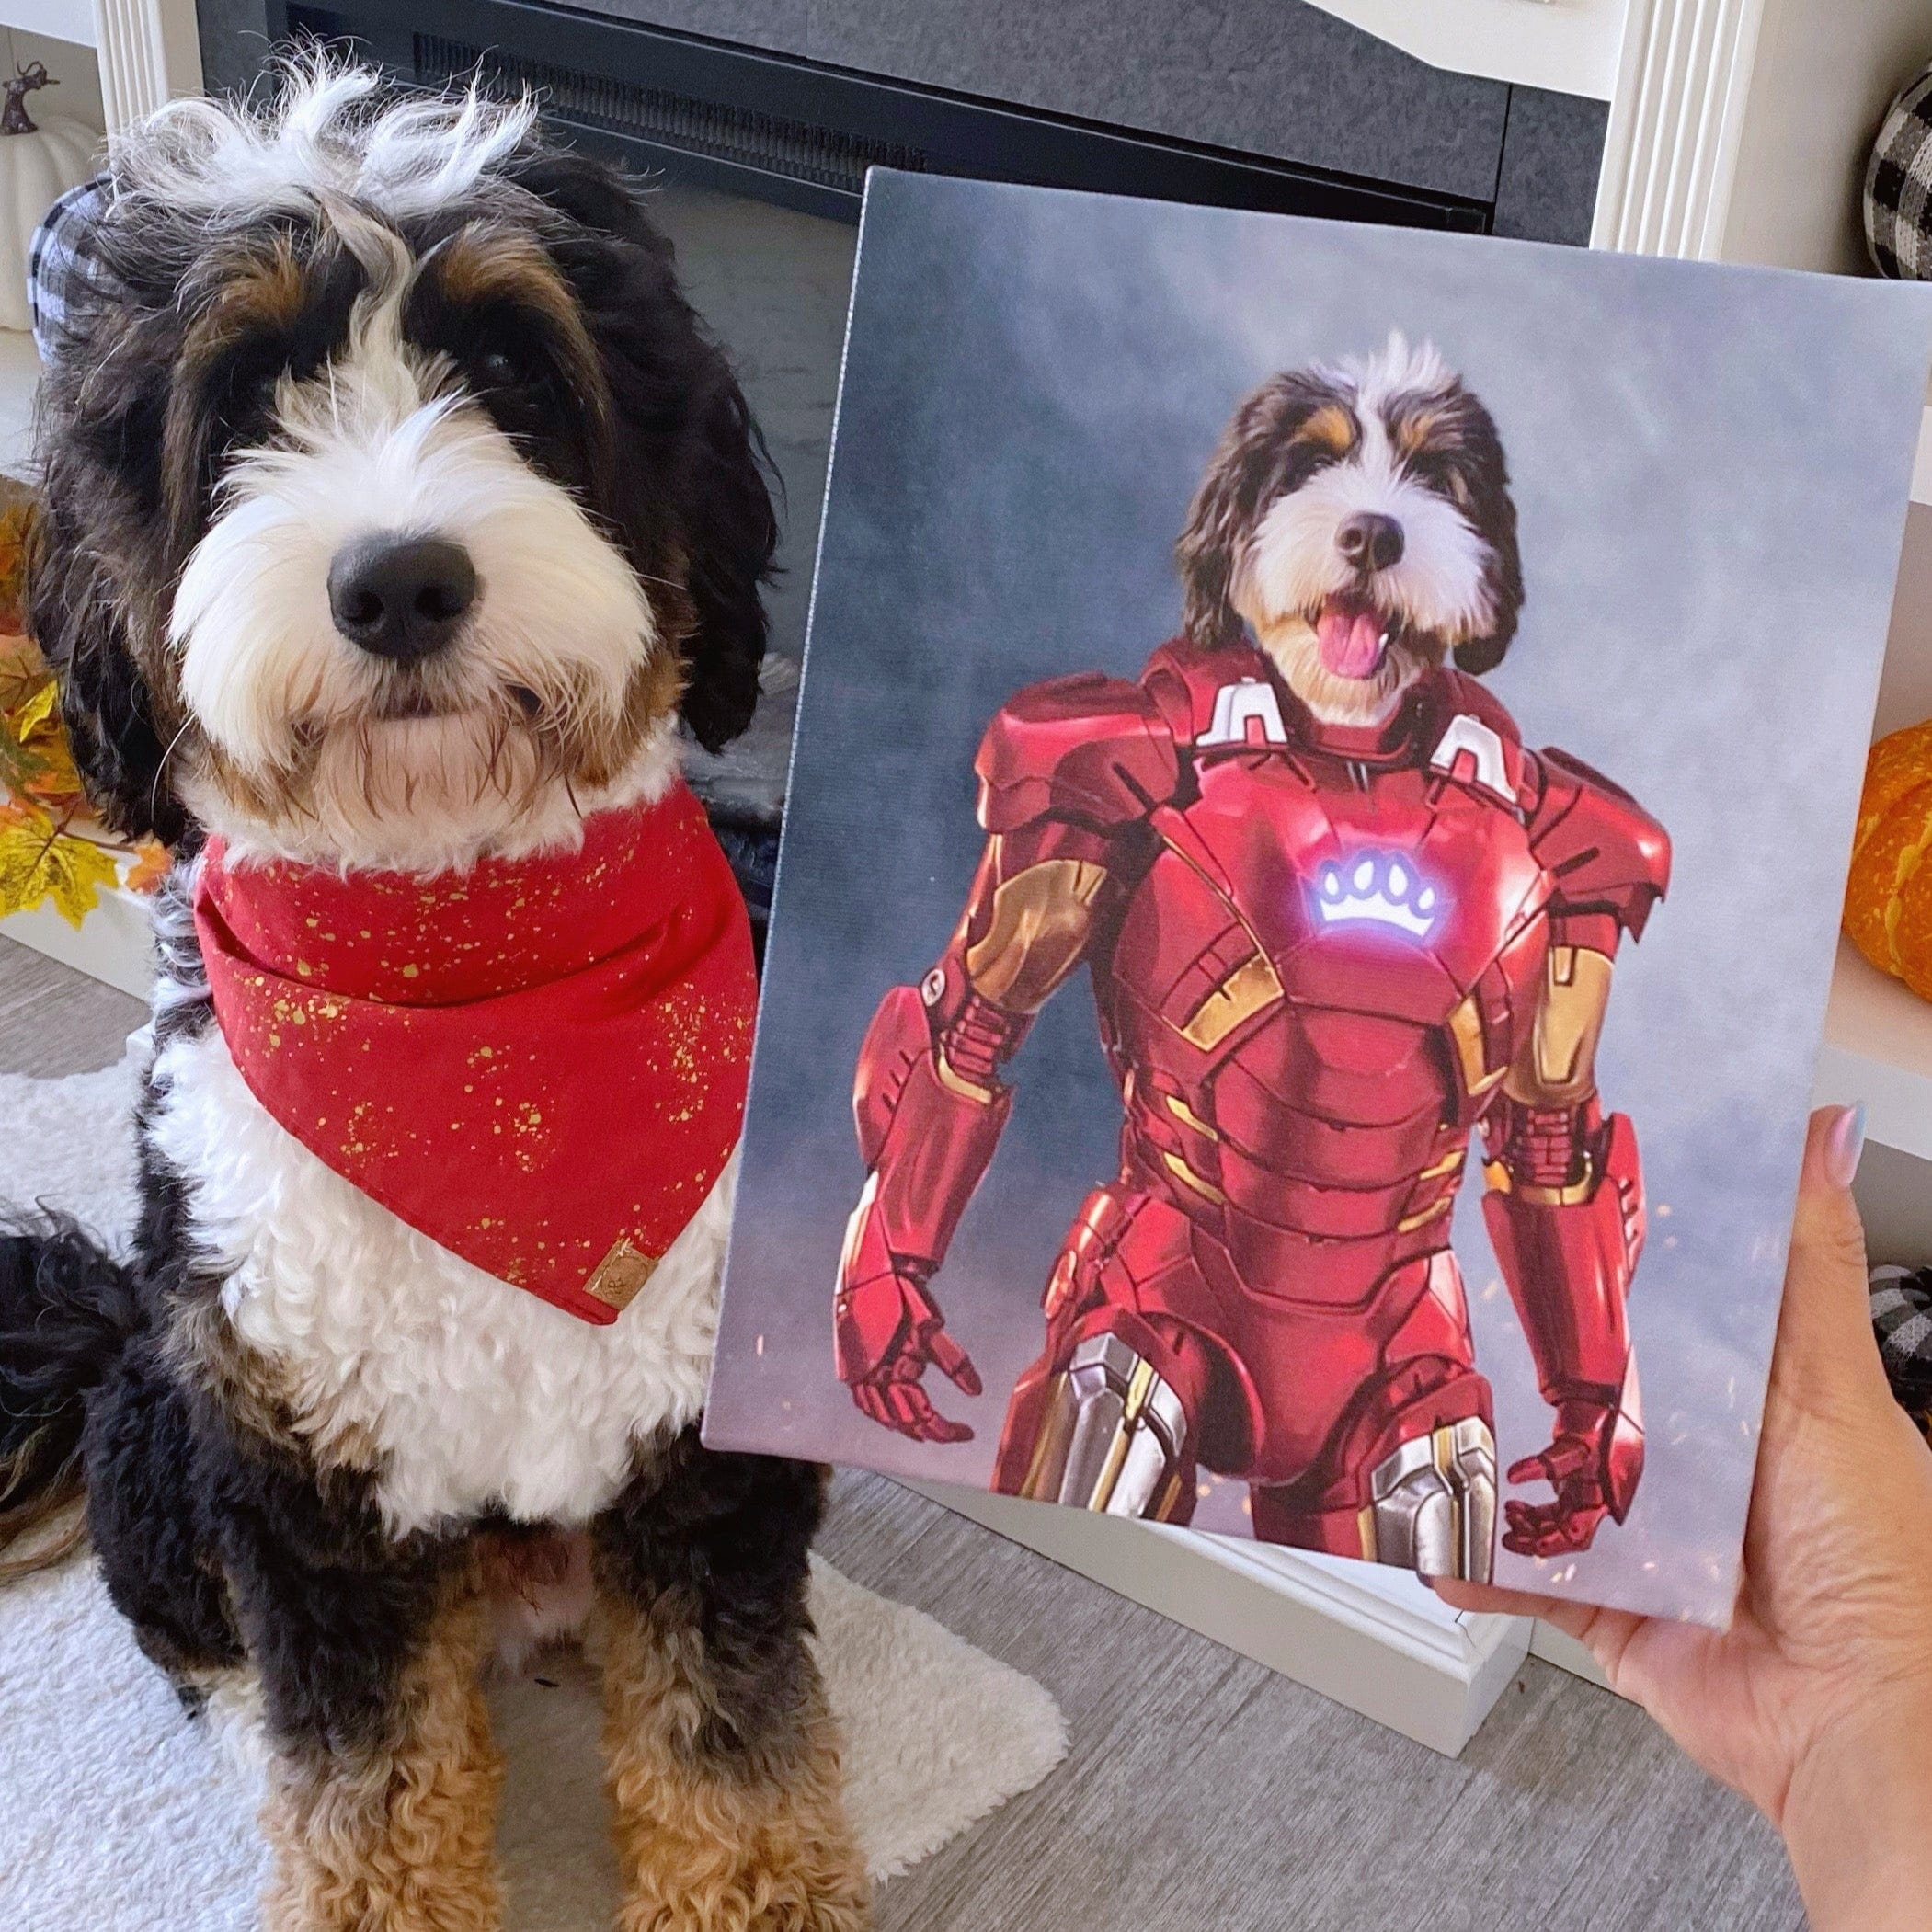 The Rich Hero - Custom Pet Canvas